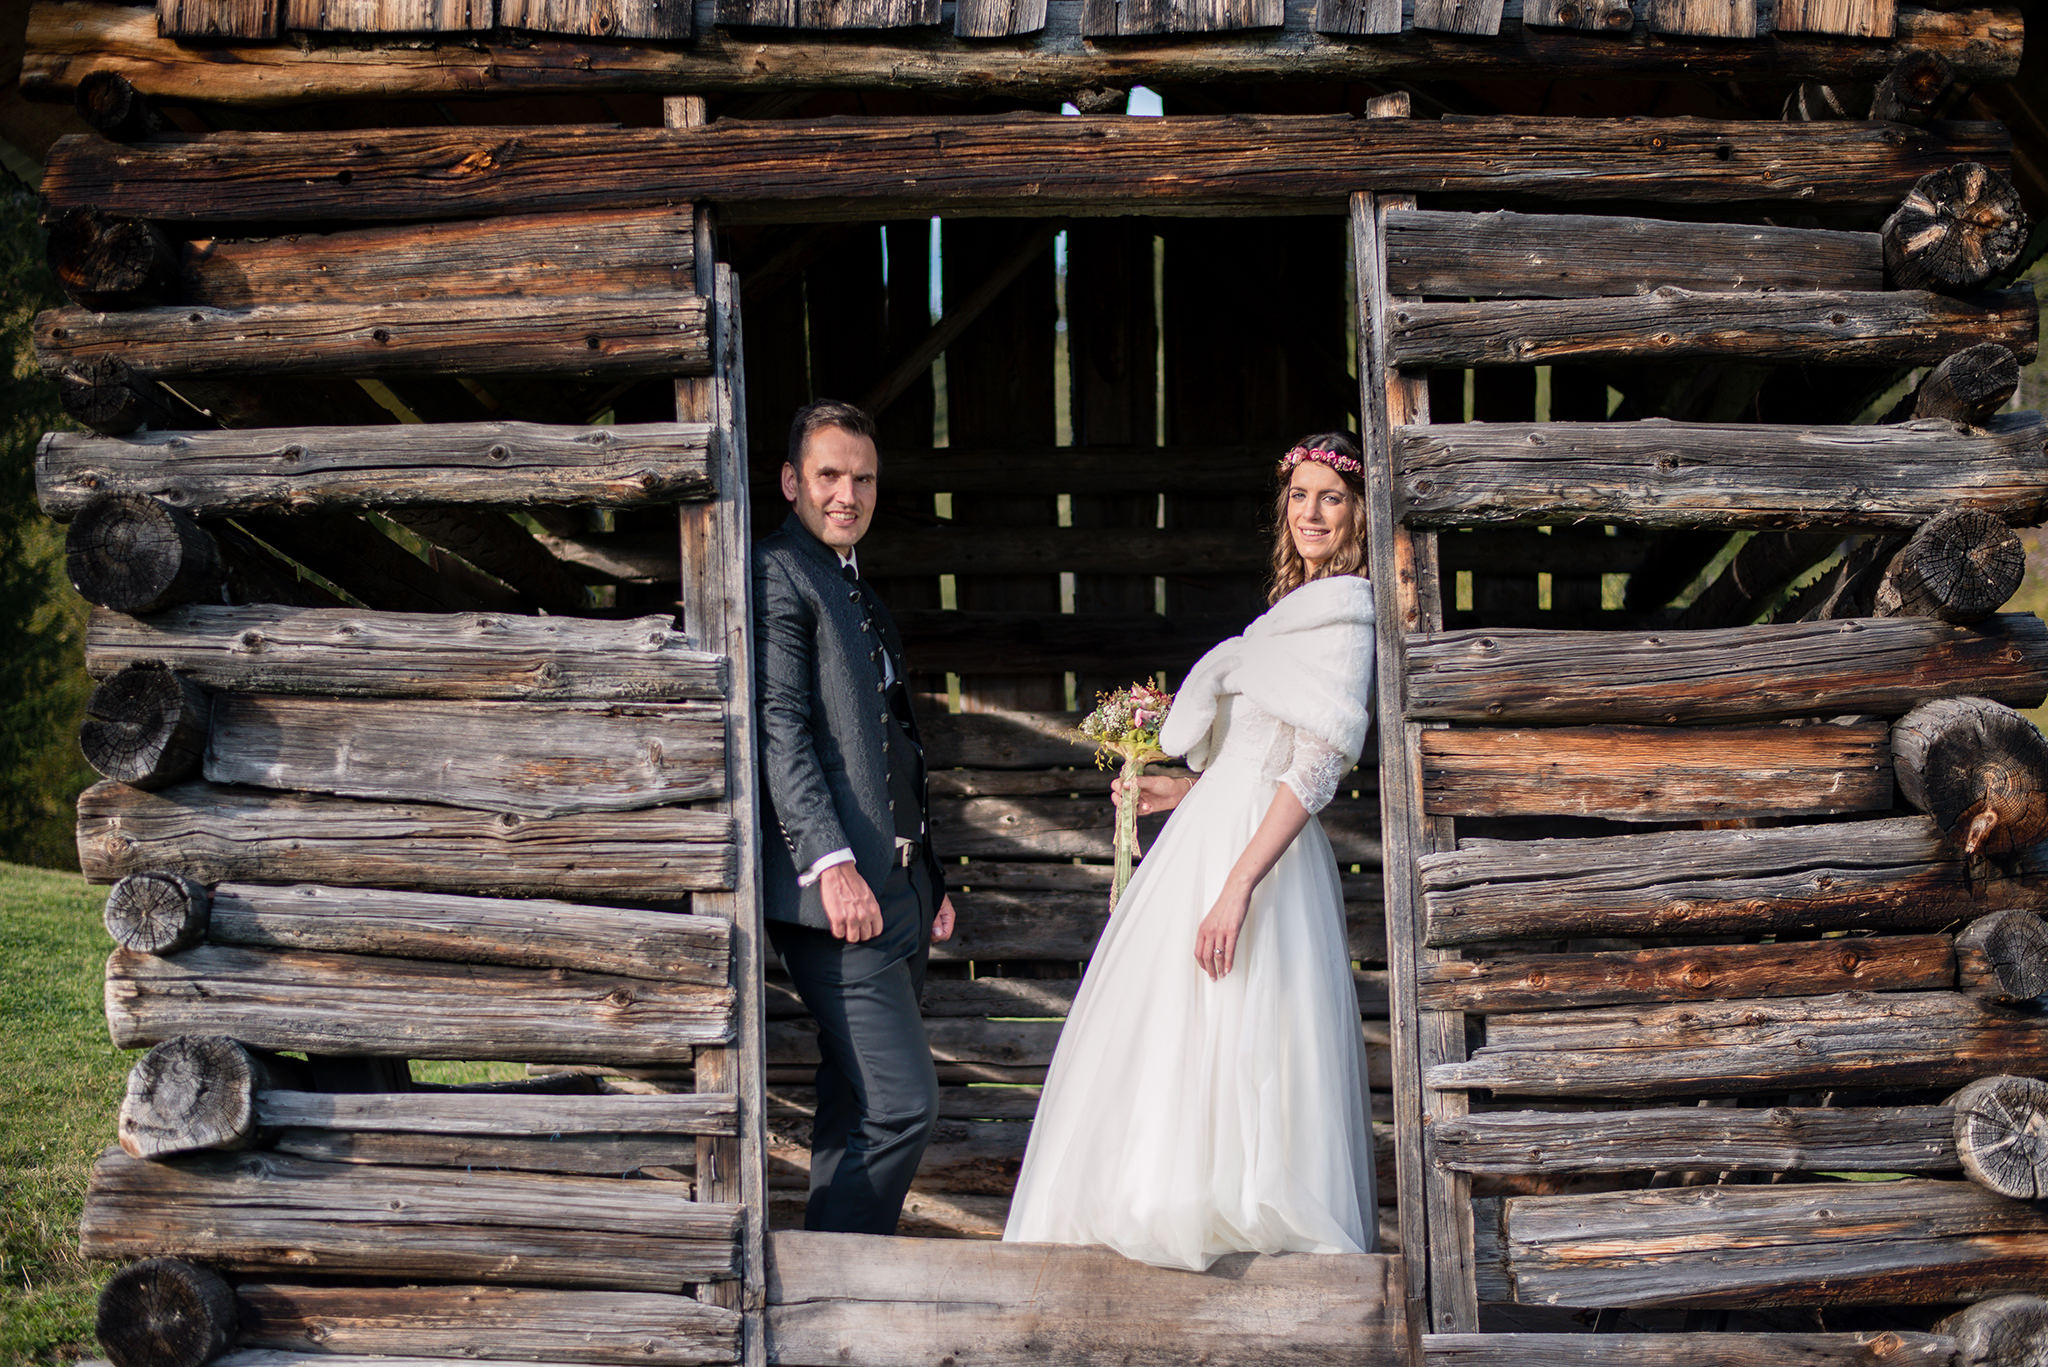 Hochzeit Shooting Manuel und Anja Oktober 2020 Tirol